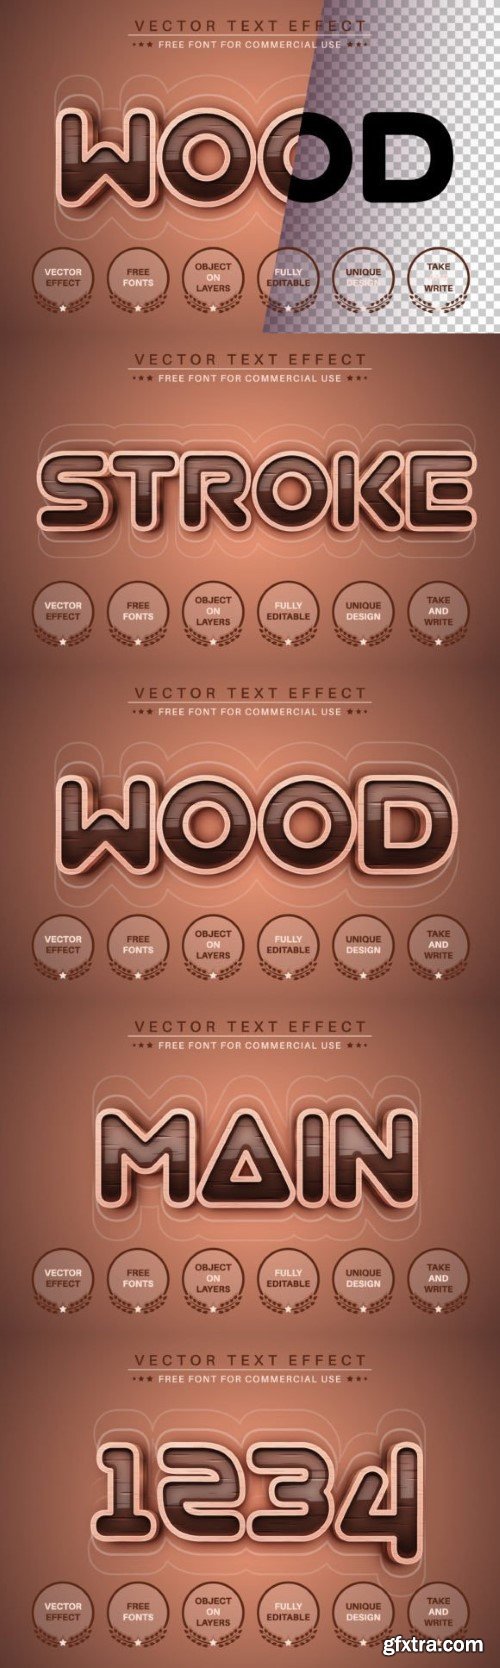 Dark Wood - Editable Text Effect